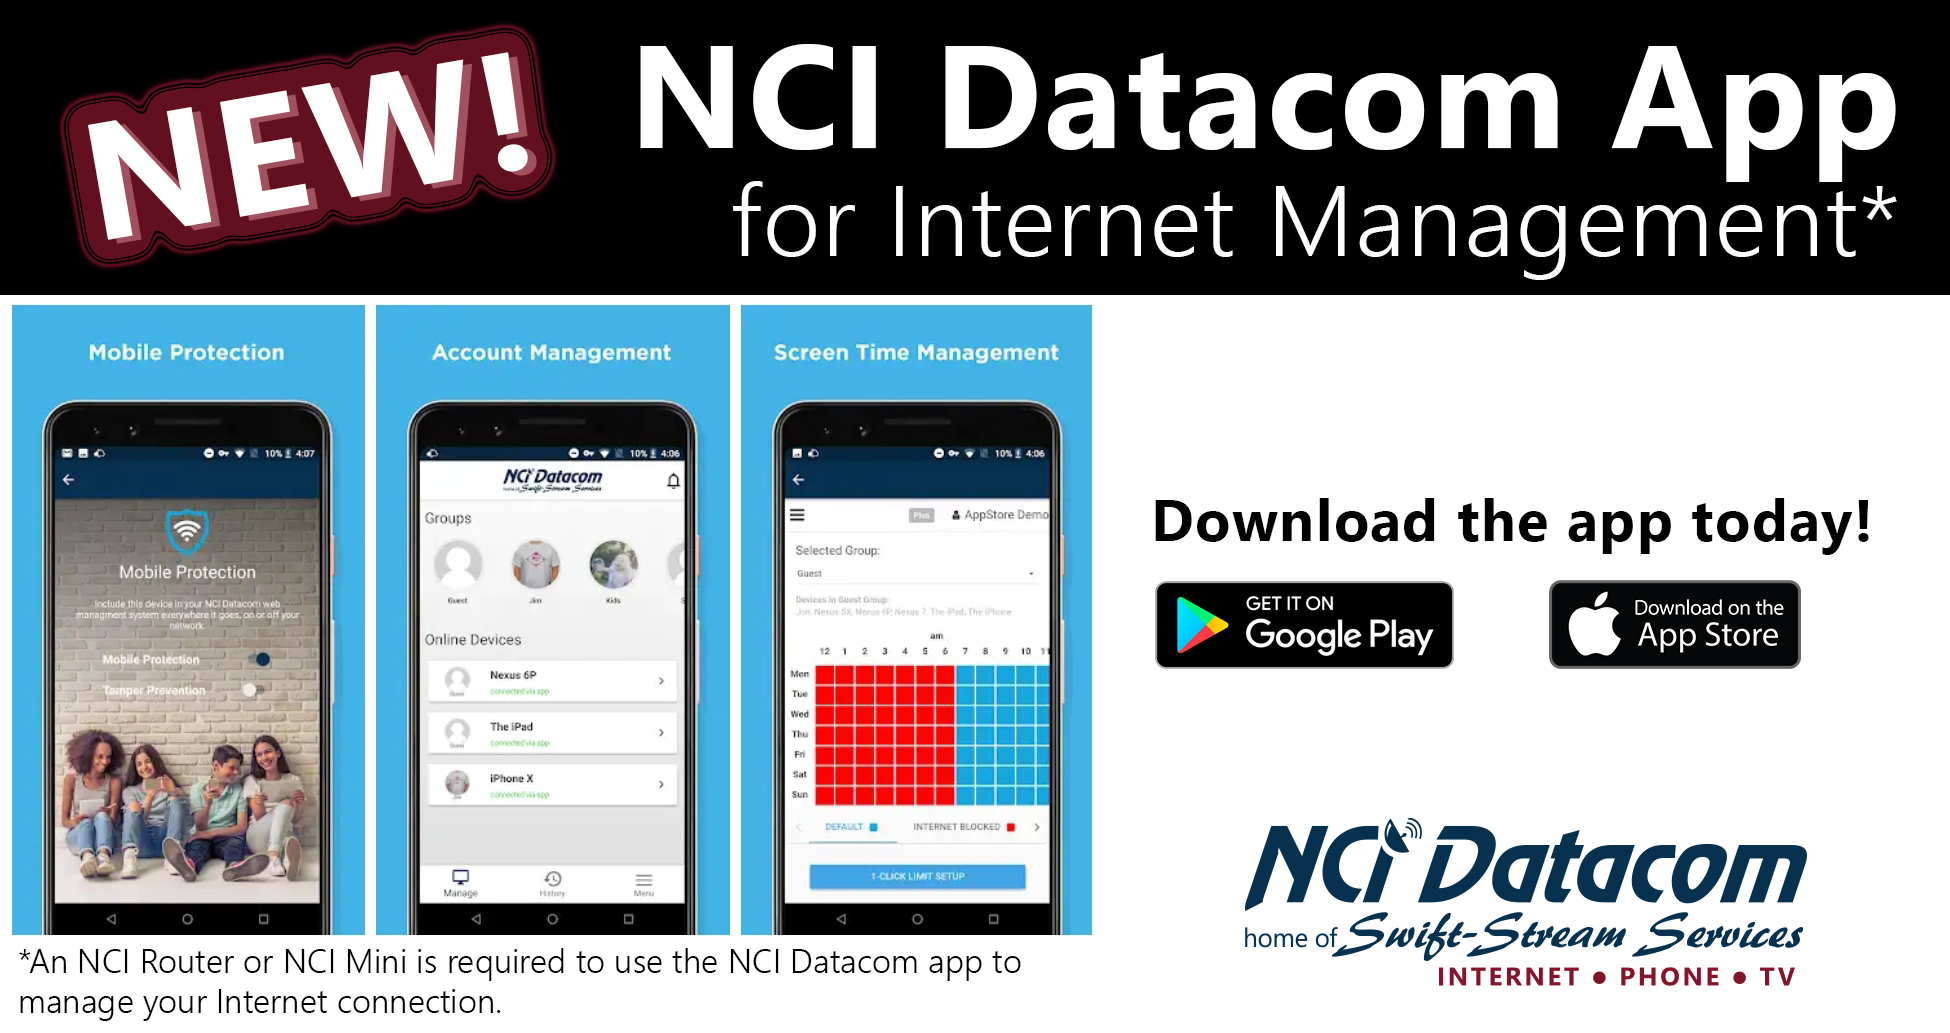 NEW! NCI Datacom App